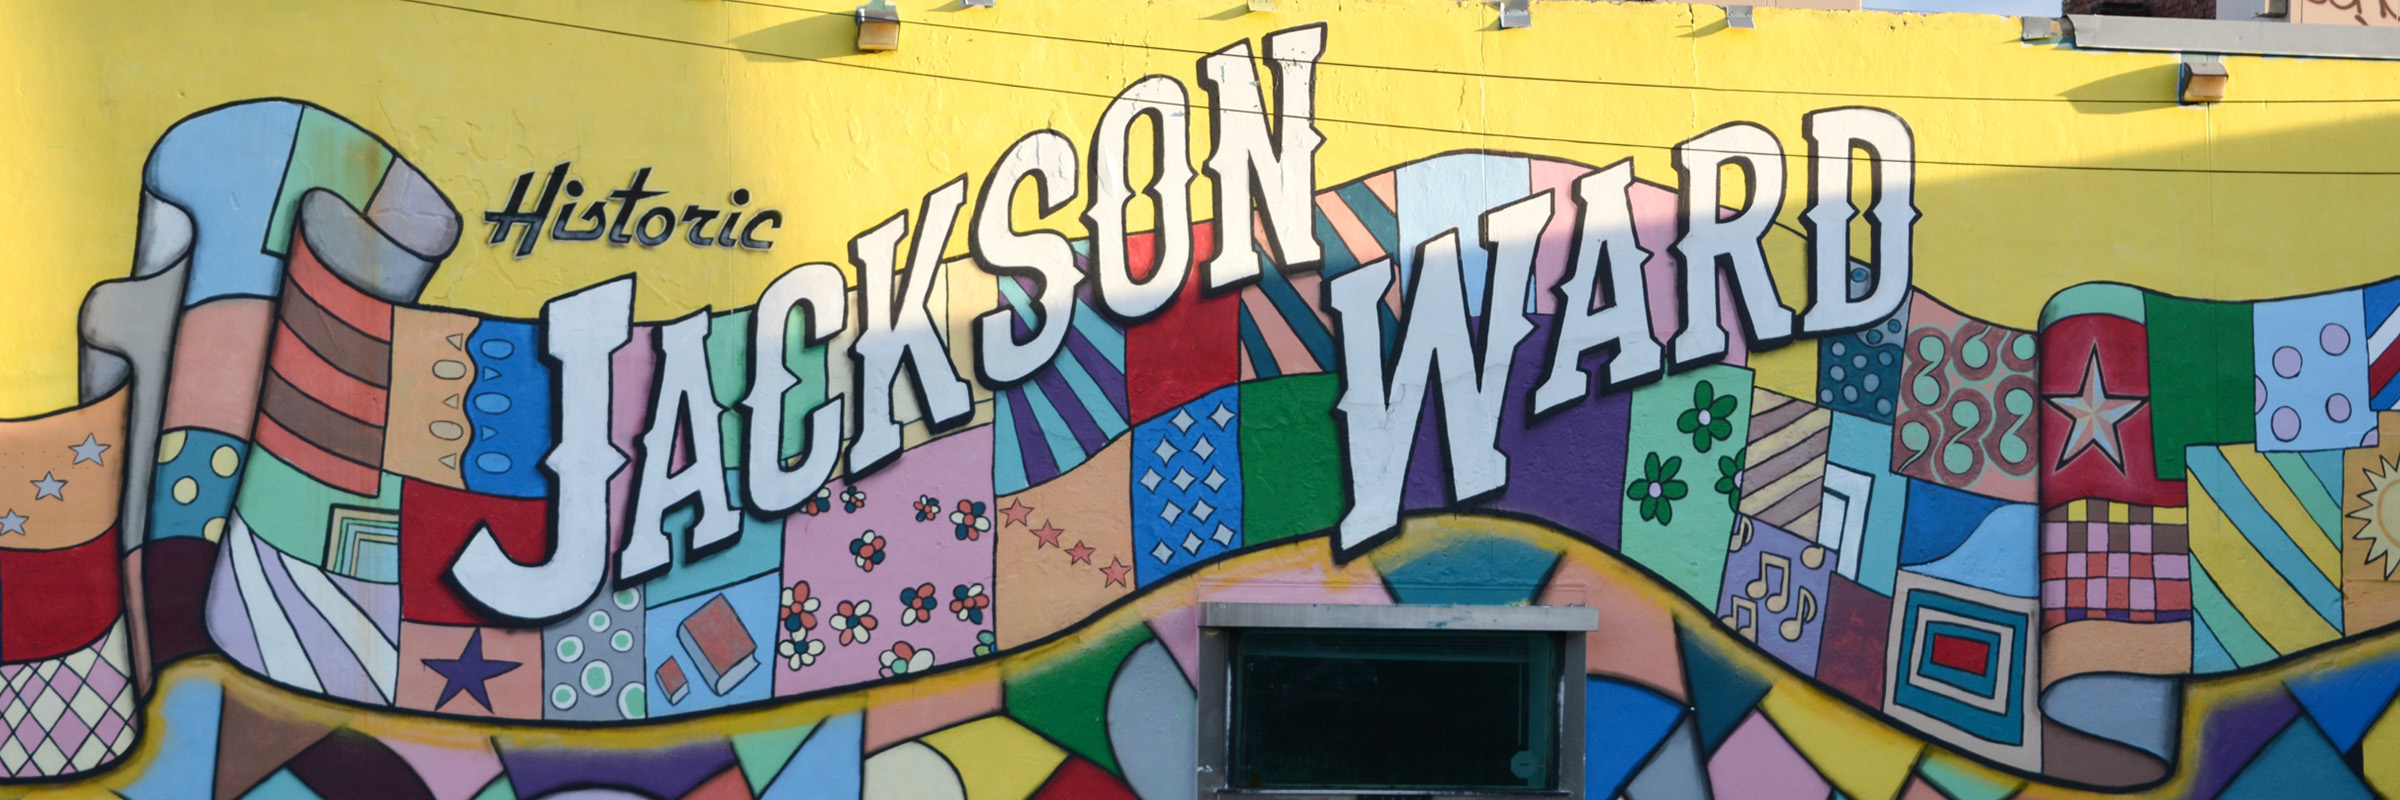 A mural in Jackson Ward.